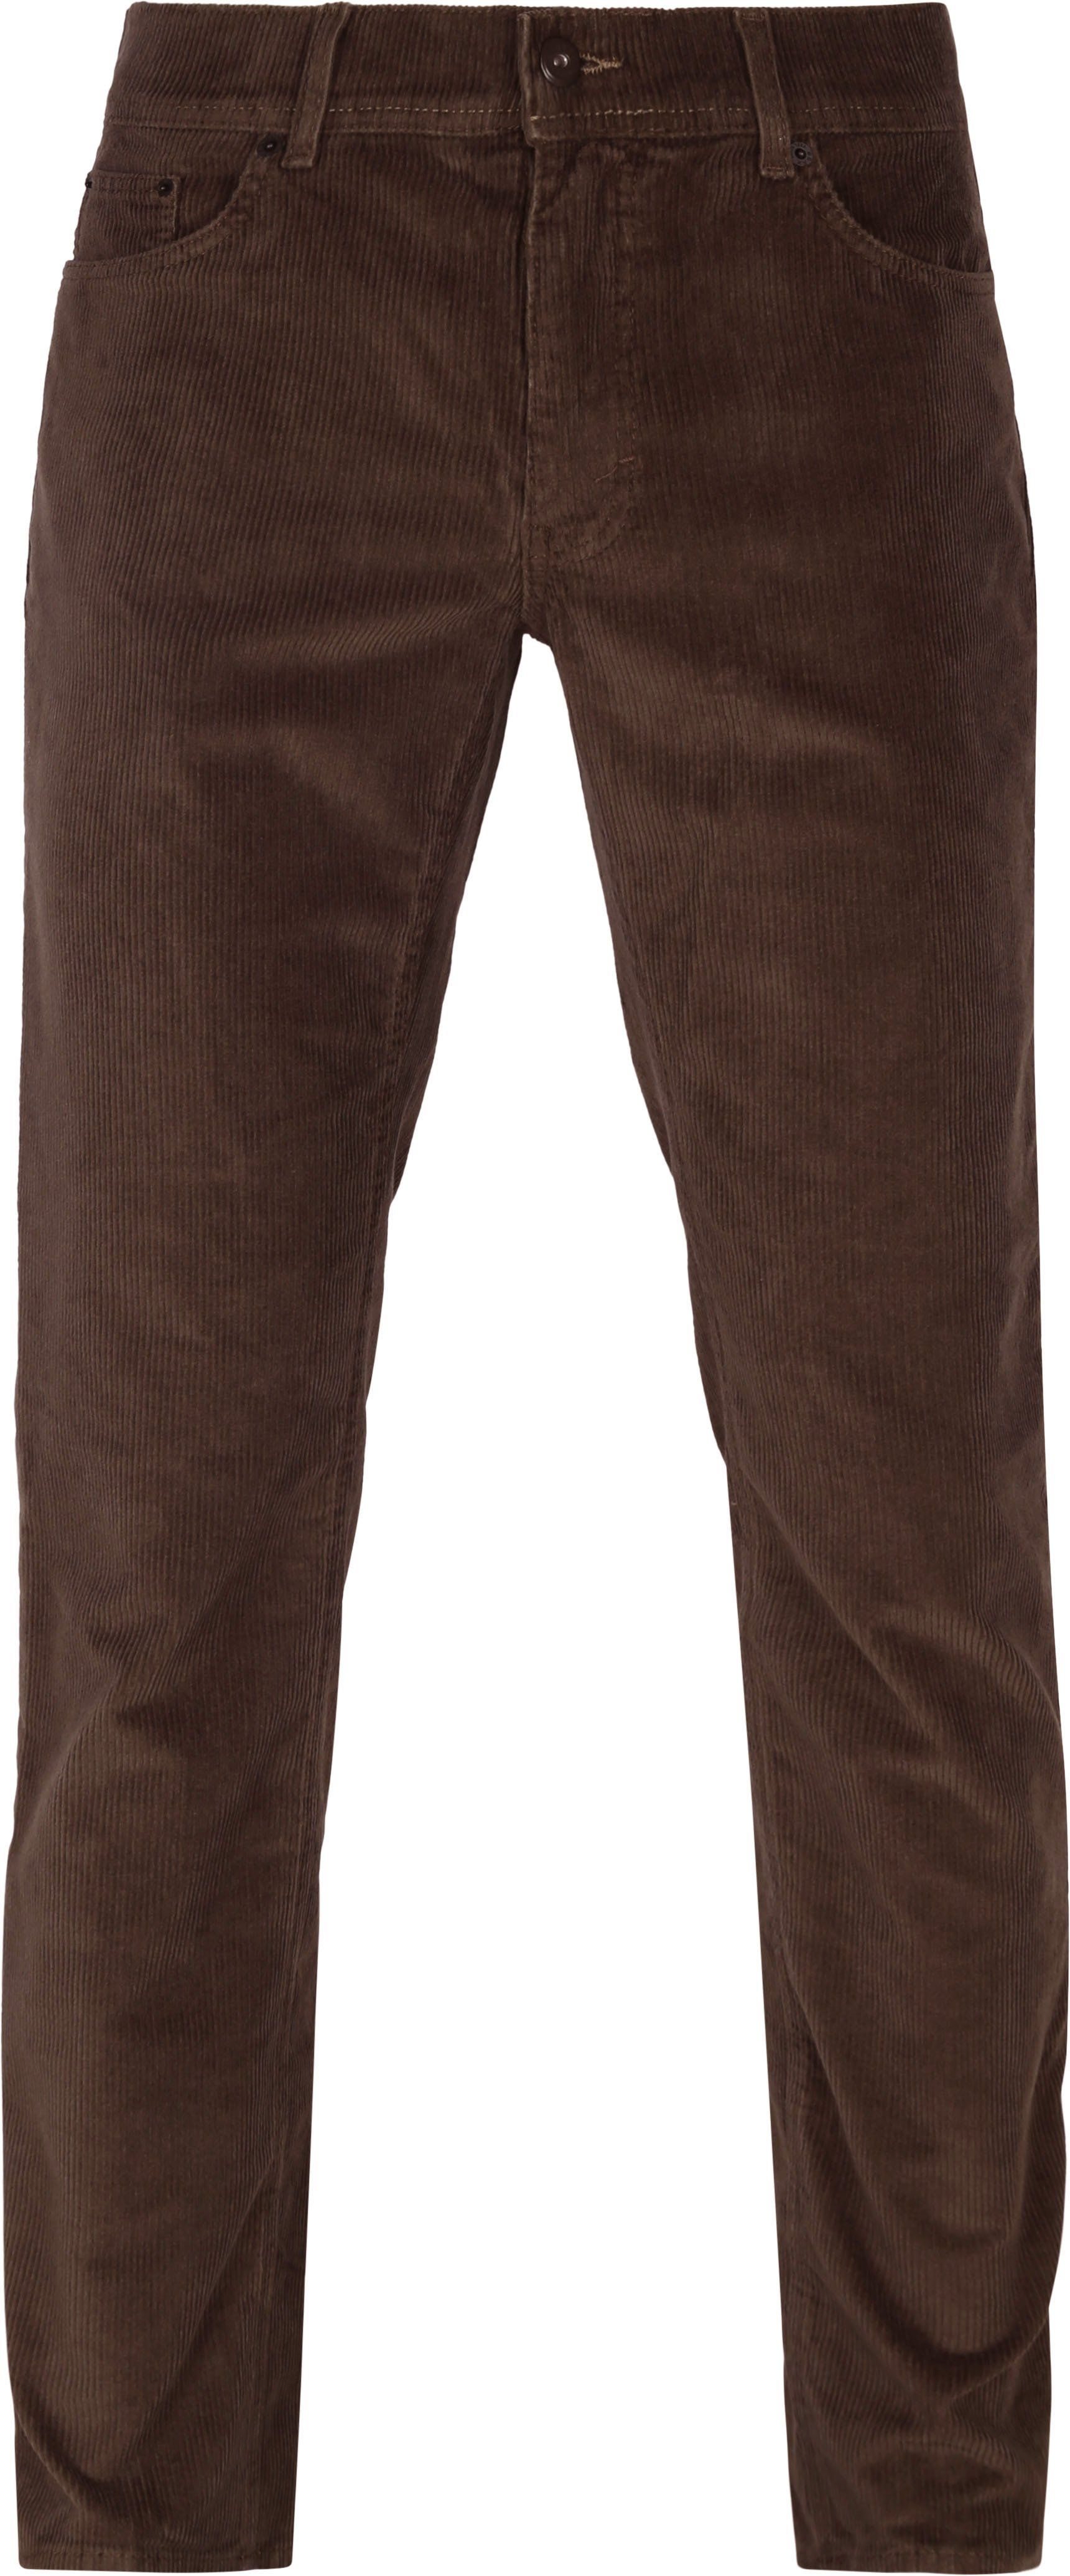 Brax Cooper Trousers Corduroy Brown size W 40